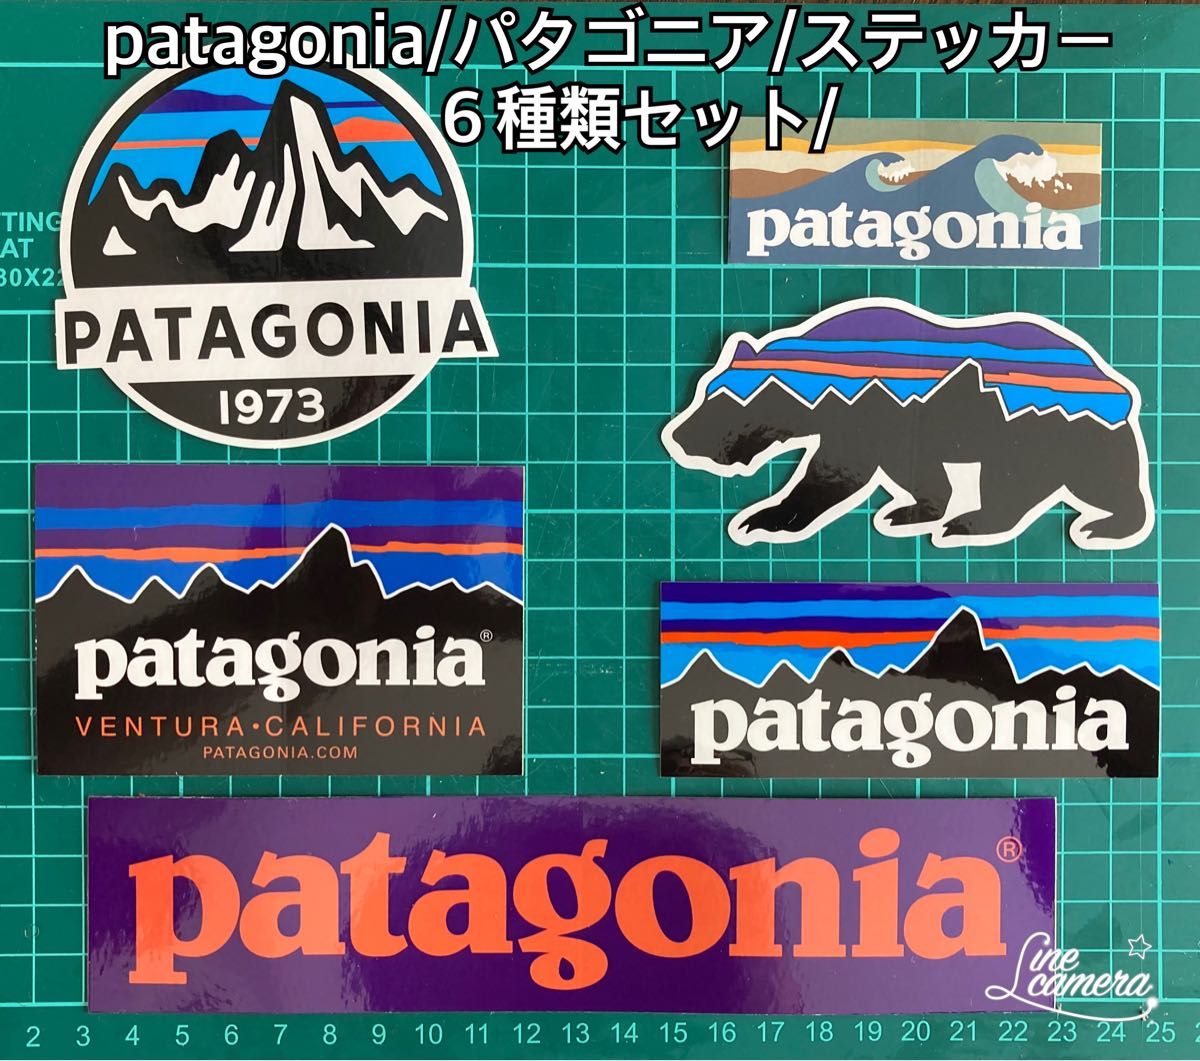 patagonia/パタゴニア/ステッカー６種類セット/新品未使用/